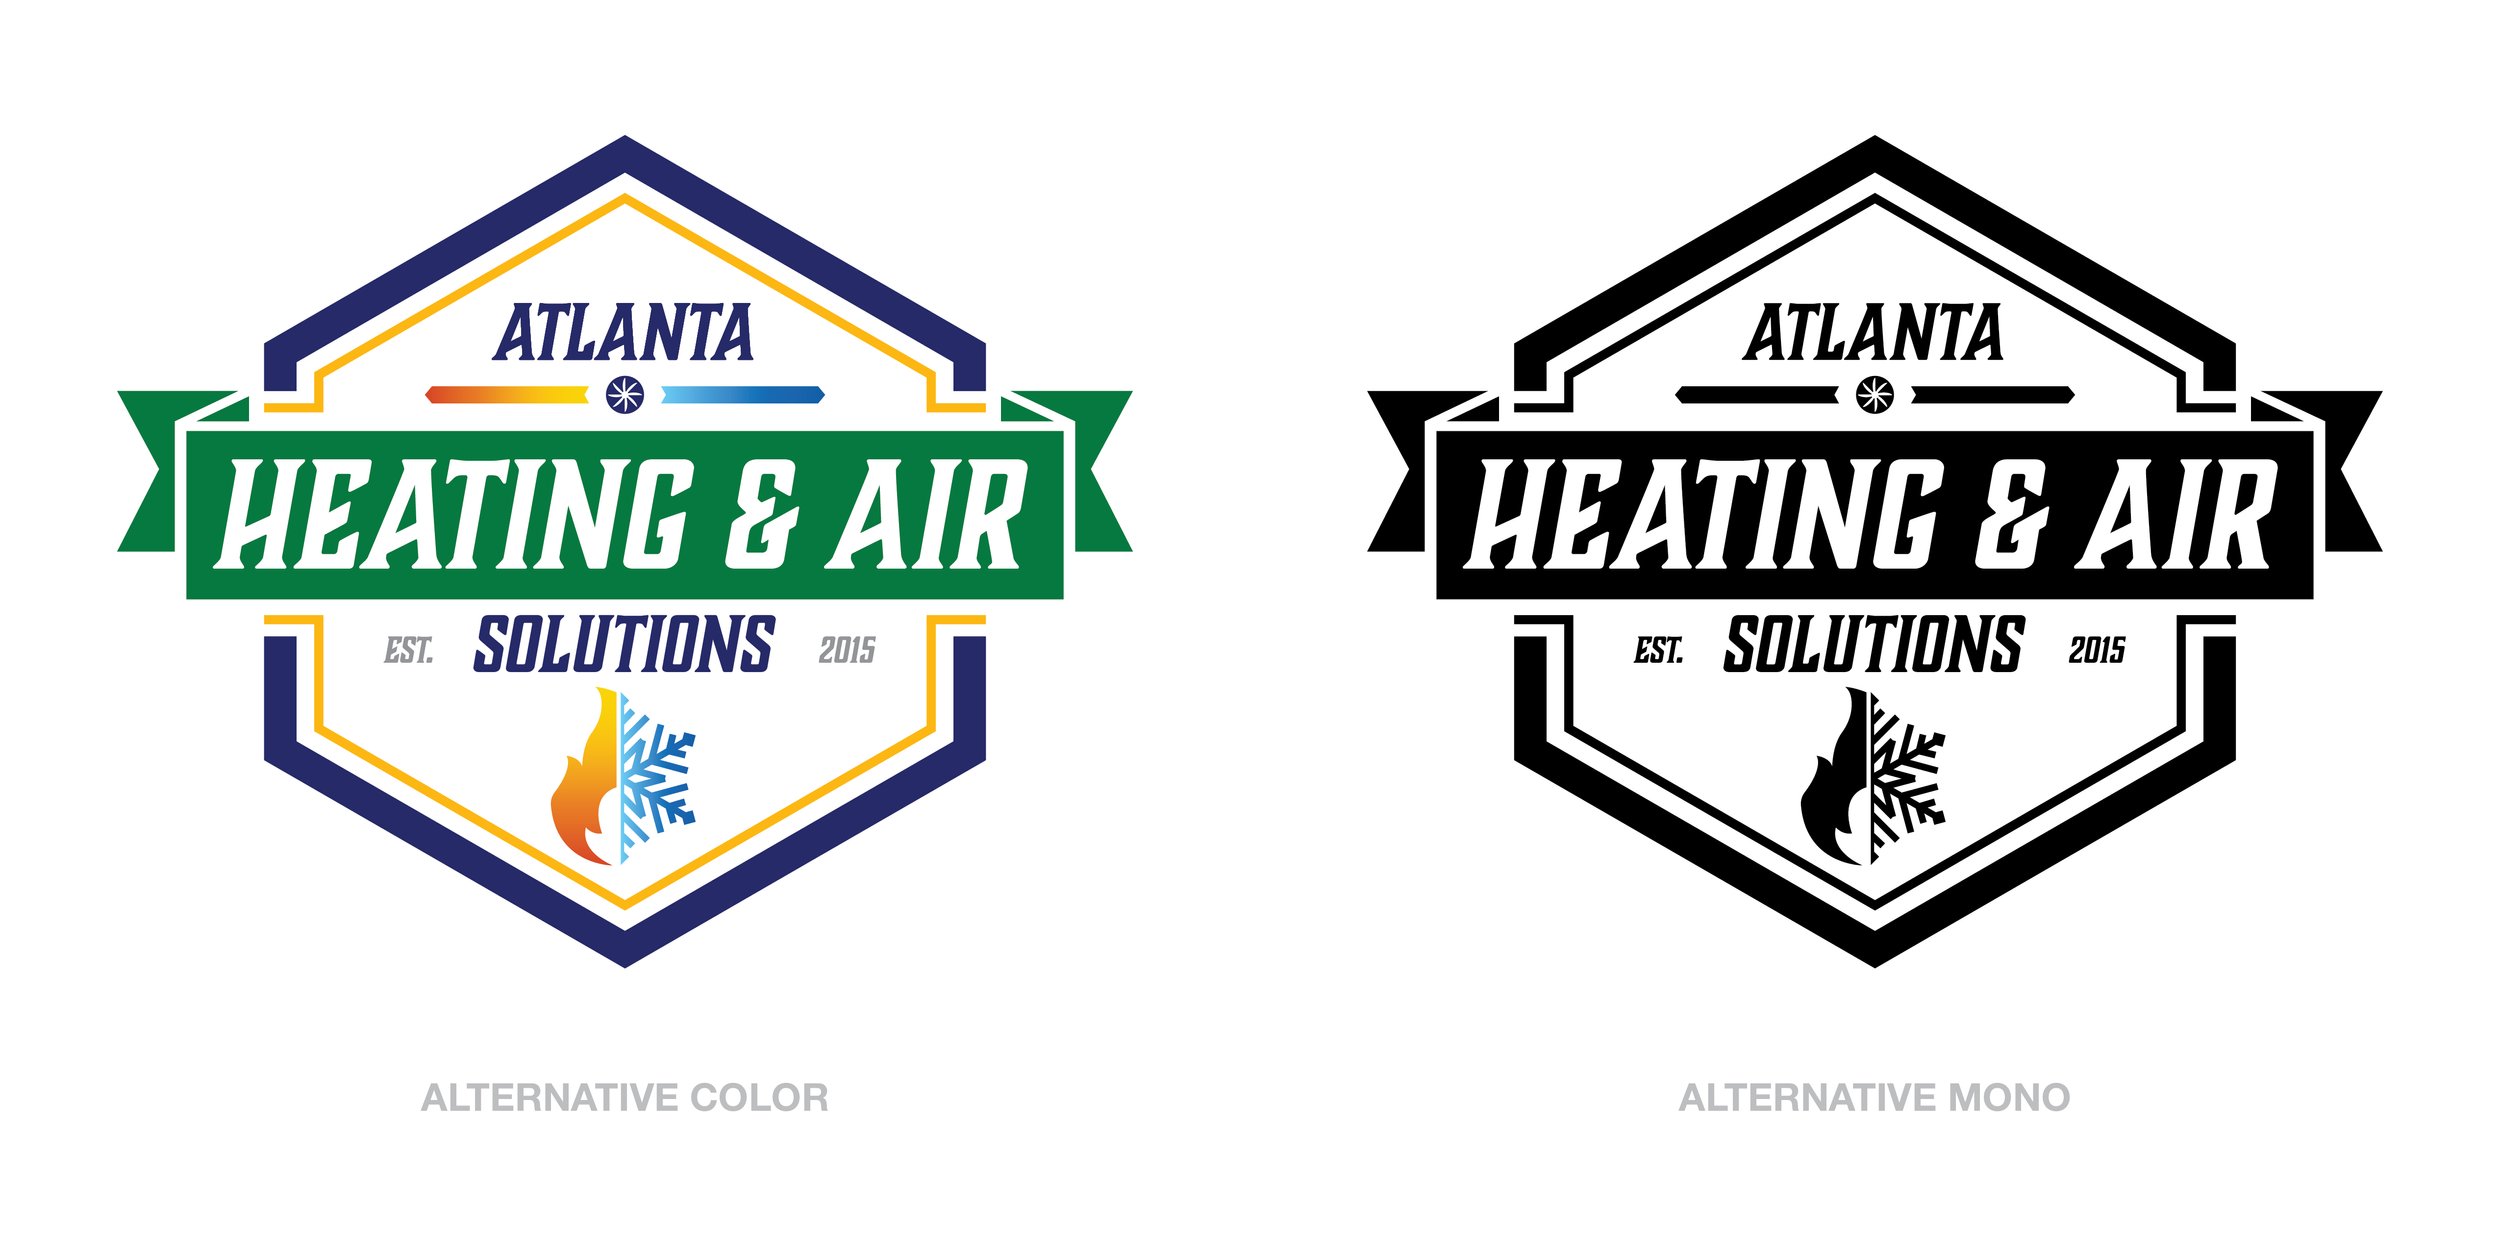 AHAS_080221 - Atlanta Heating and Air - Portfolio Proof 3.jpg